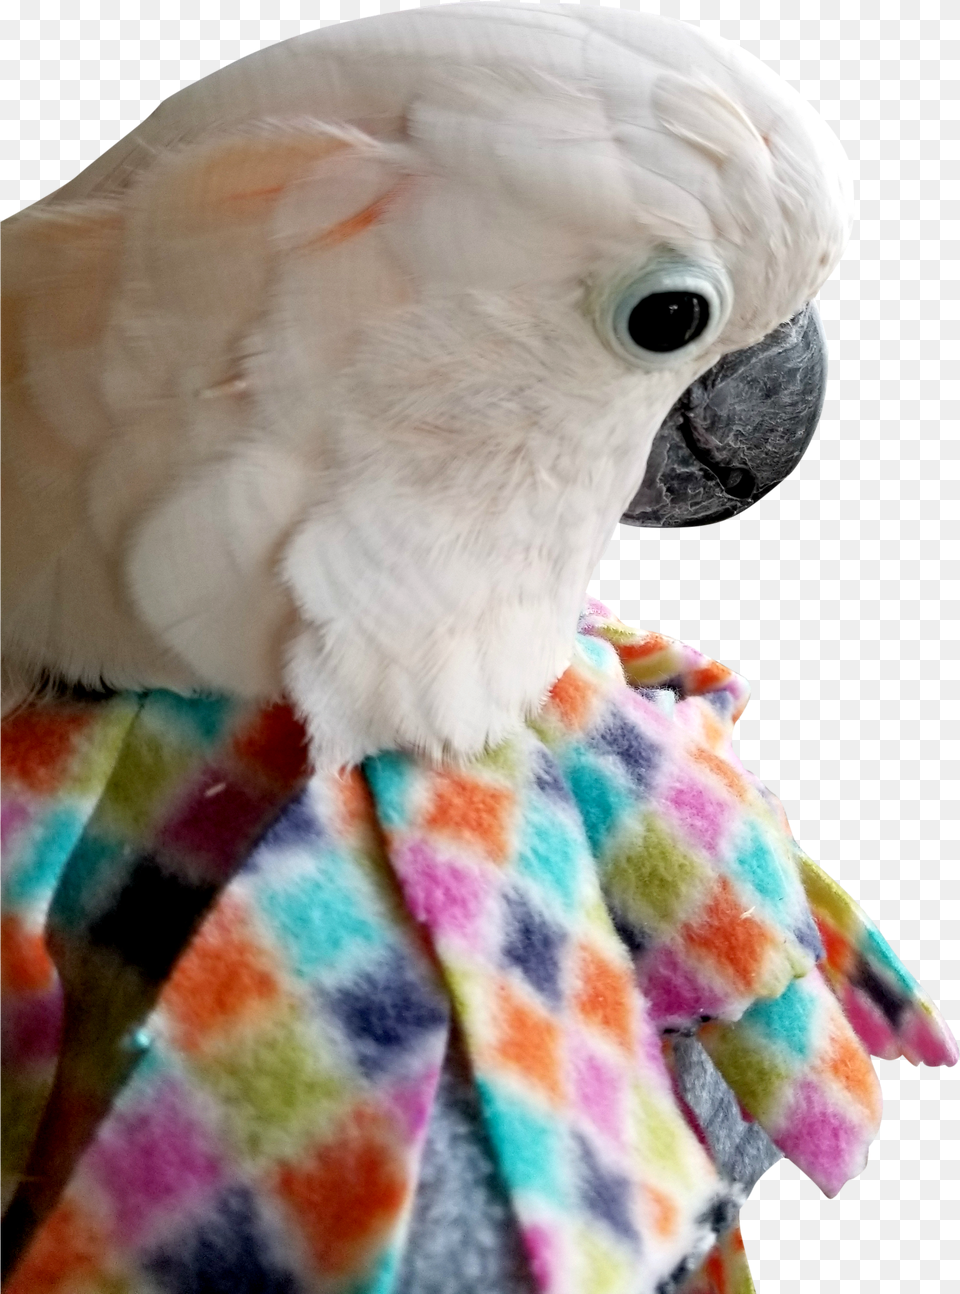 Velcro Closure Cone Fleece Bird Collar By Unruffledrx Feather Plucking Bird Collar Png Image